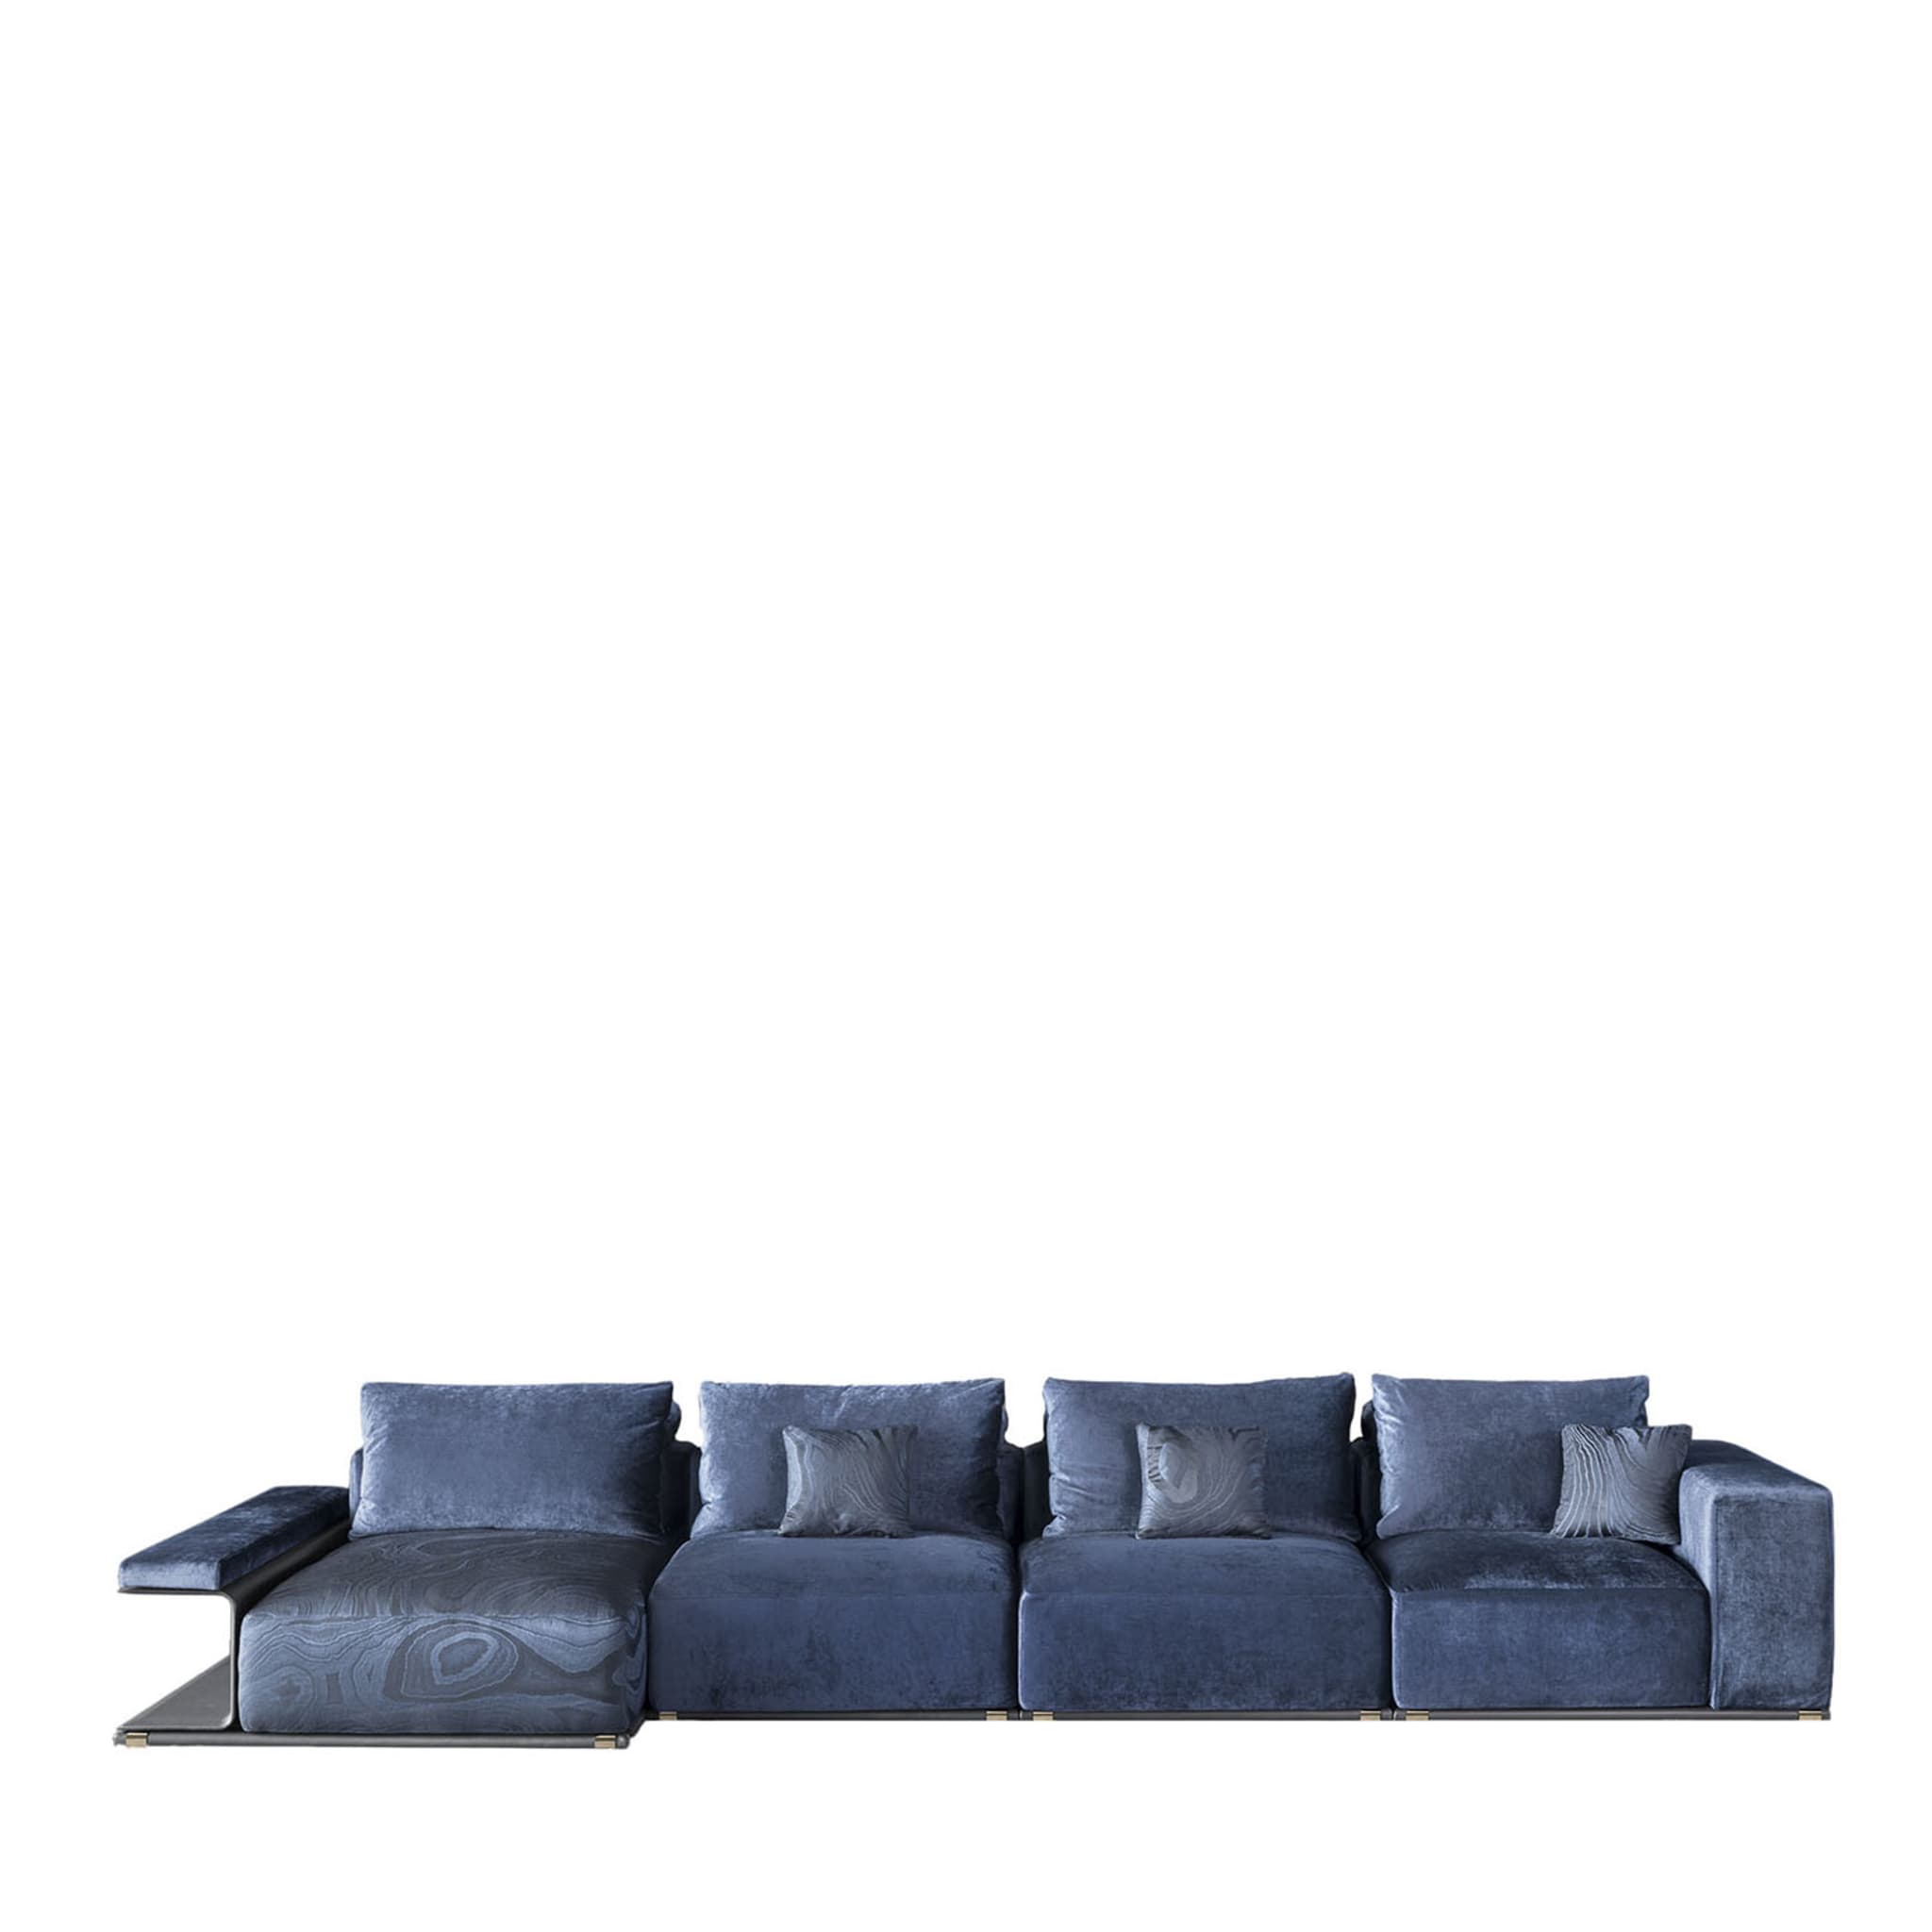 Zeno Modular Blue Sofa #1 - Main view